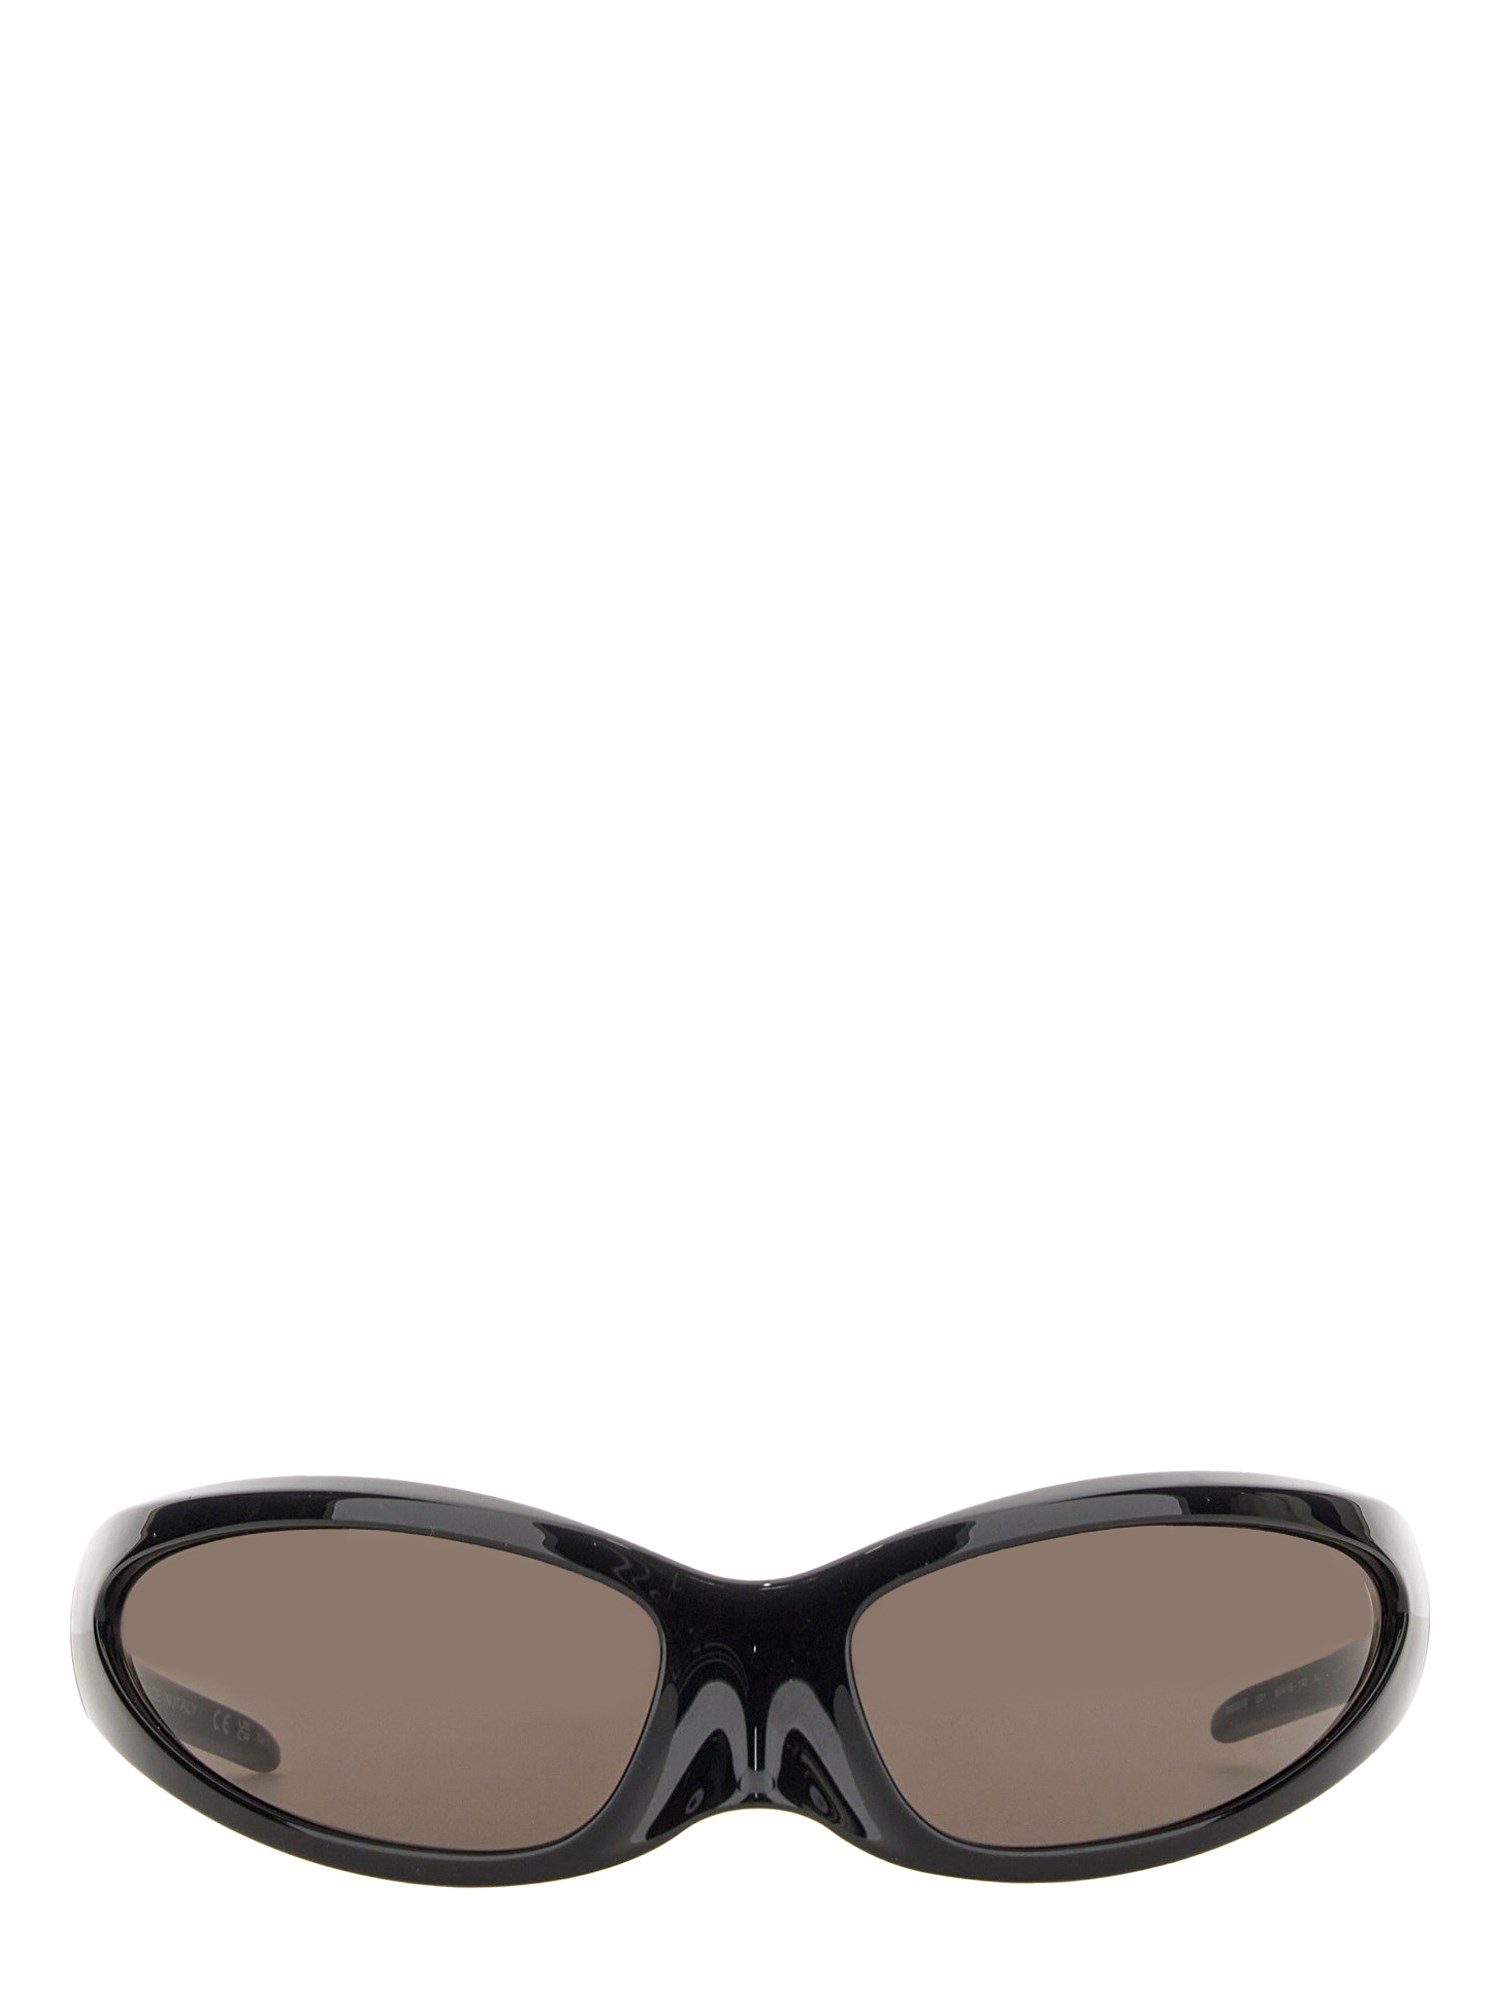 balenciaga skin cat sunglasses